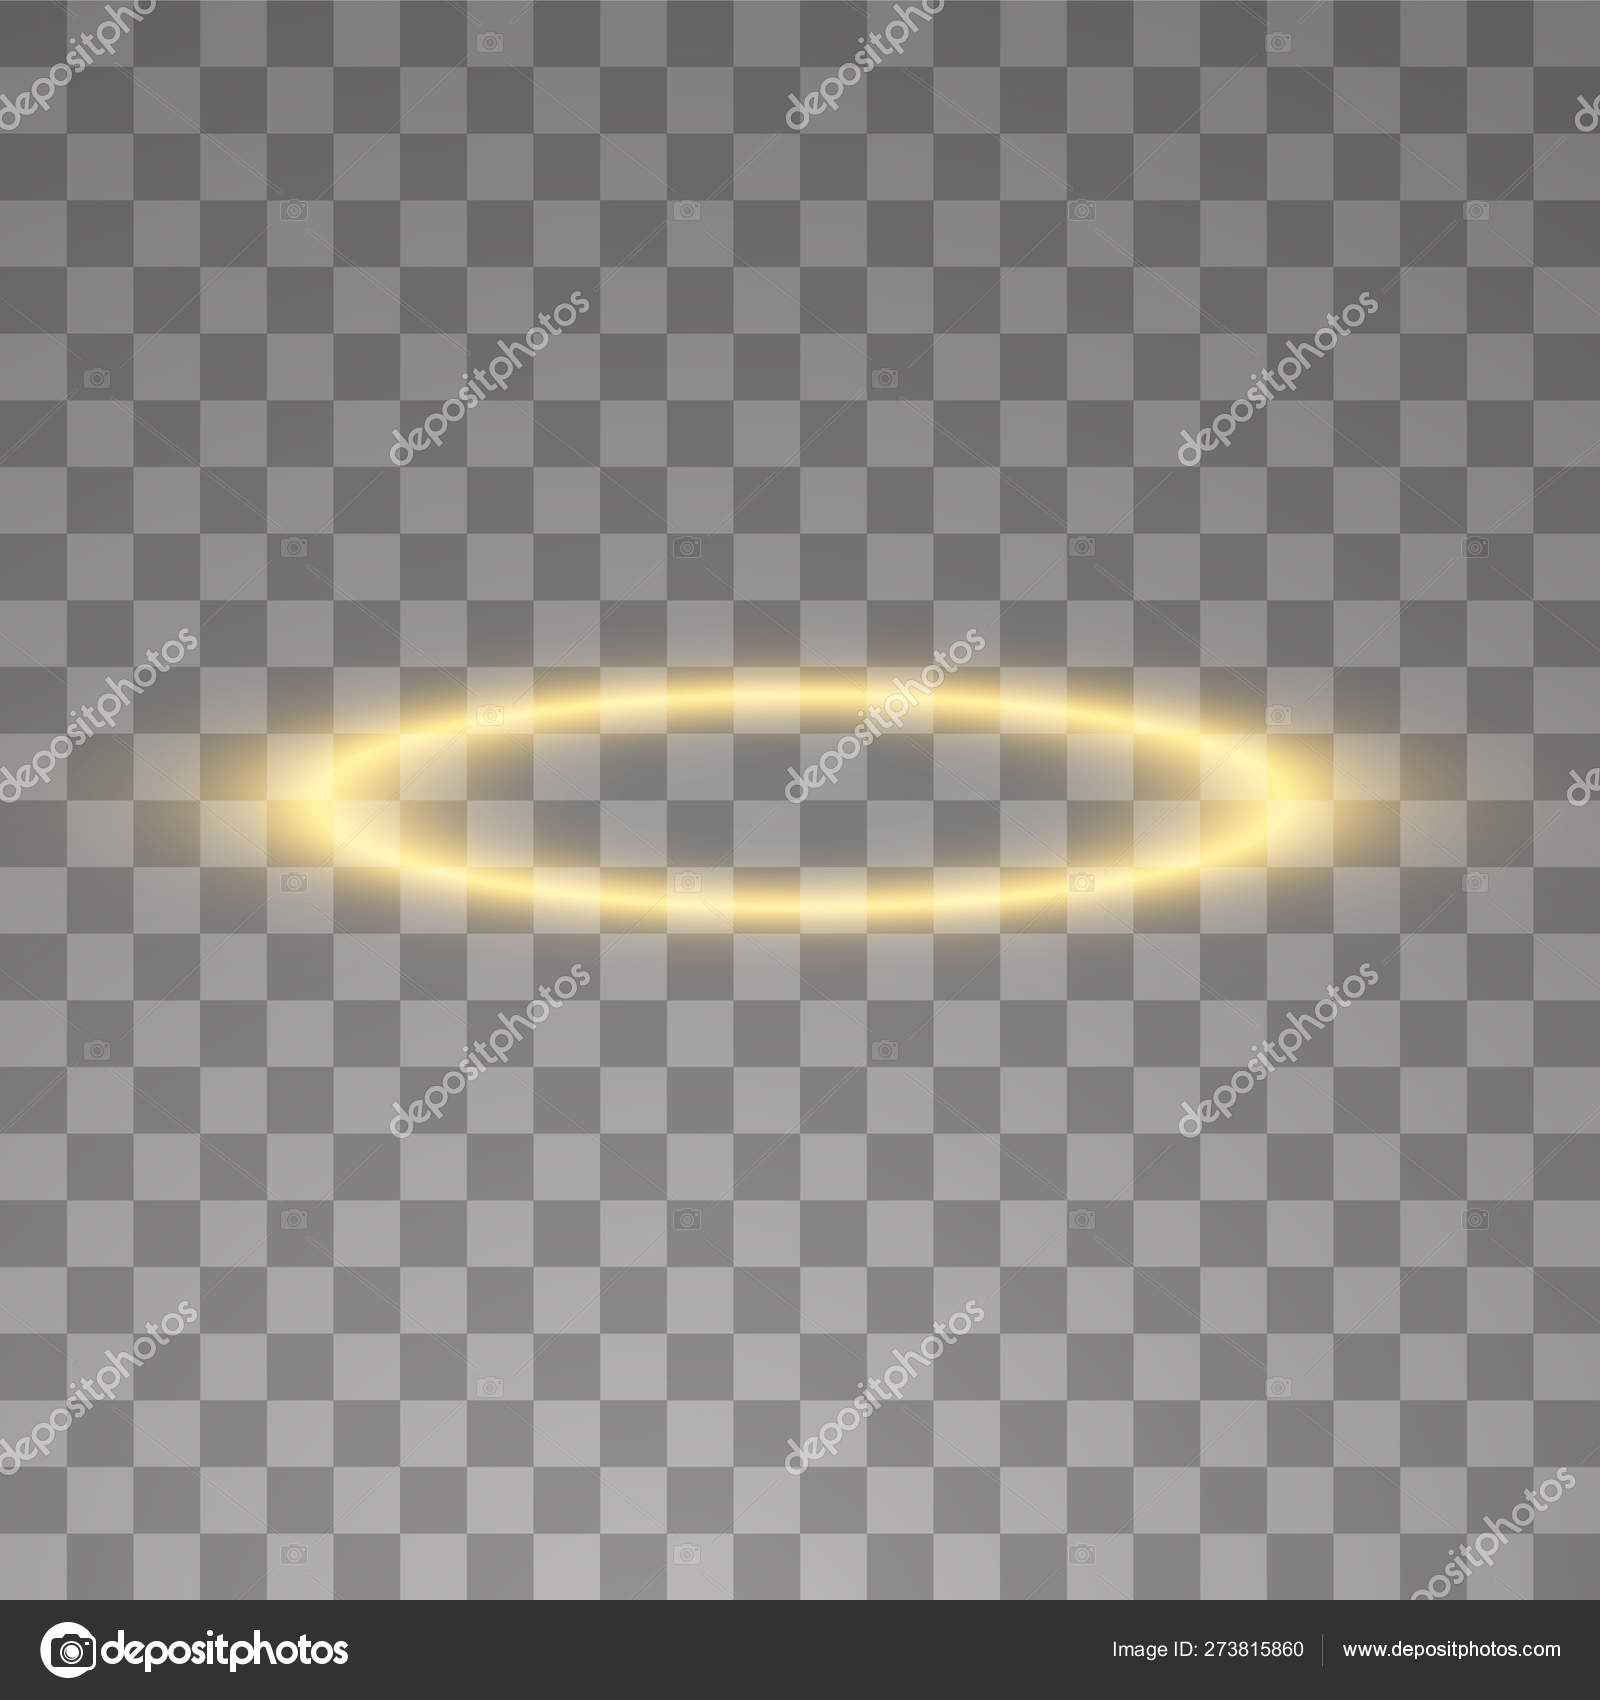 depositphotos 273815860 stock illustration gold halo angel ring isolated